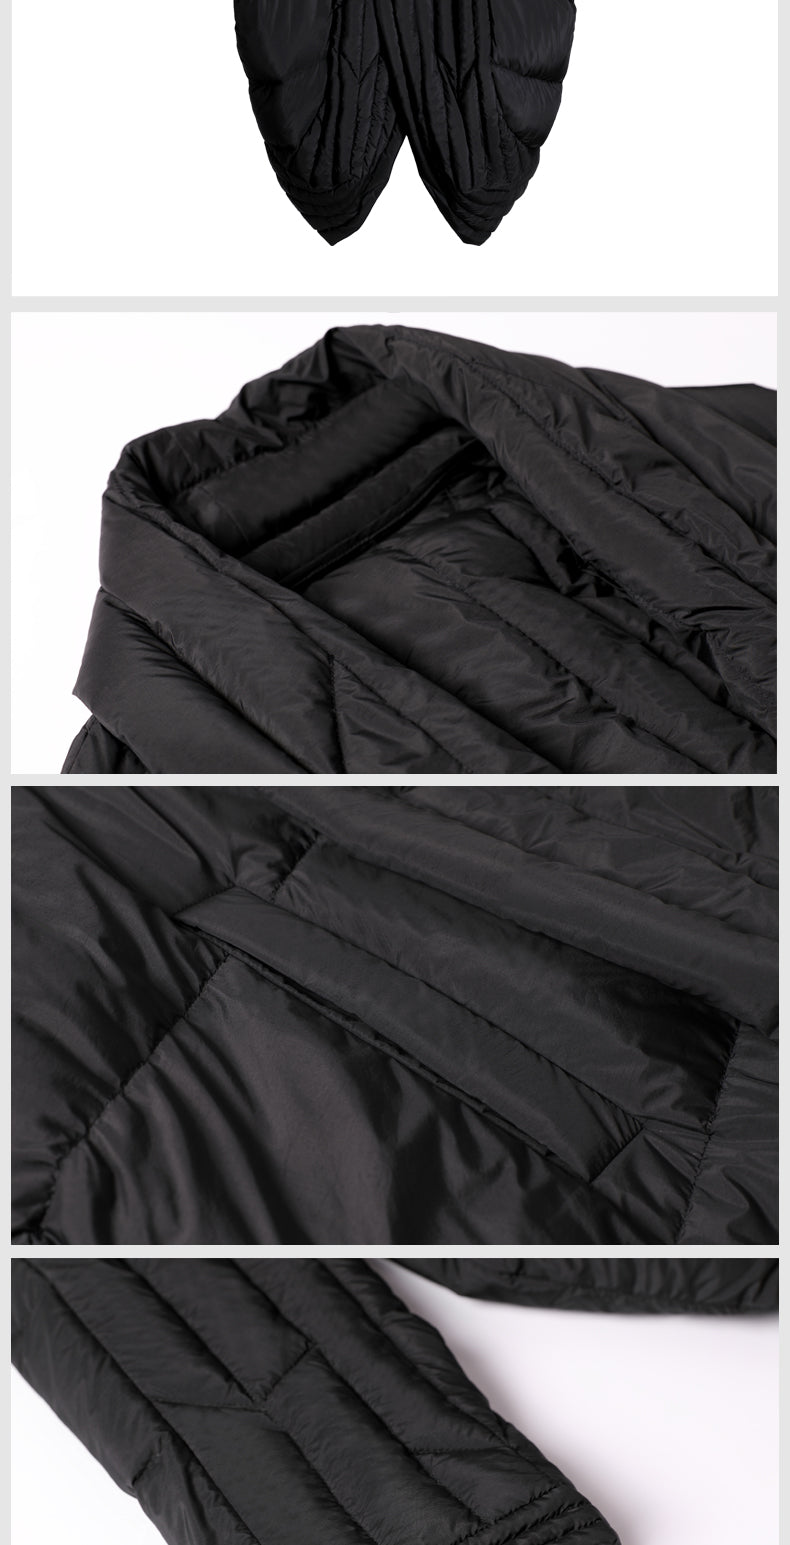 Original Designer Winter Dark Extra-Long Length Over the Knee Irregular Jacket